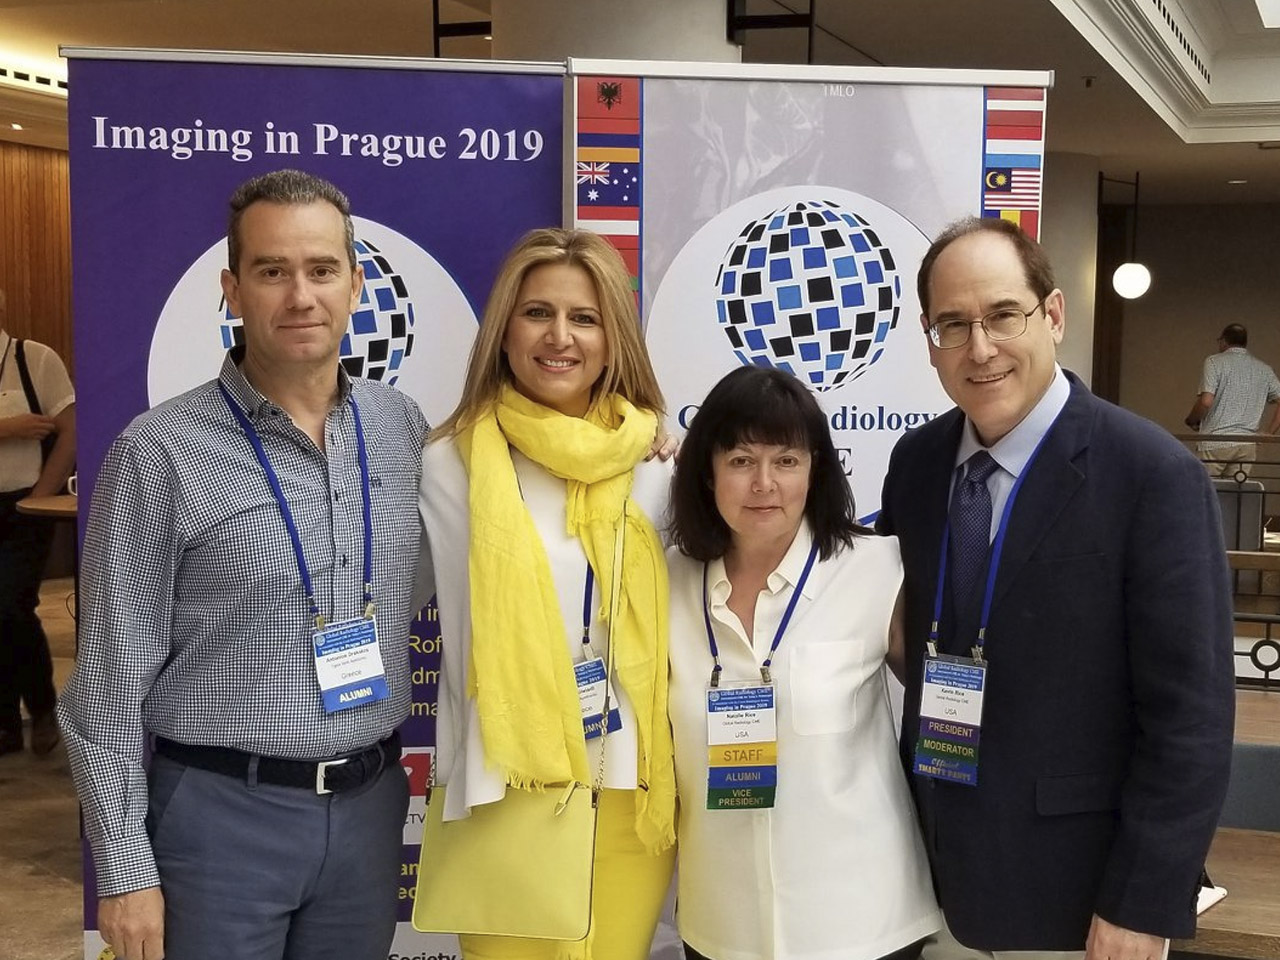 Elena-Vasileiadi Drakotou - Drakotos Antonios - Global Radiology CME Conference - Imaging in Prague 2019